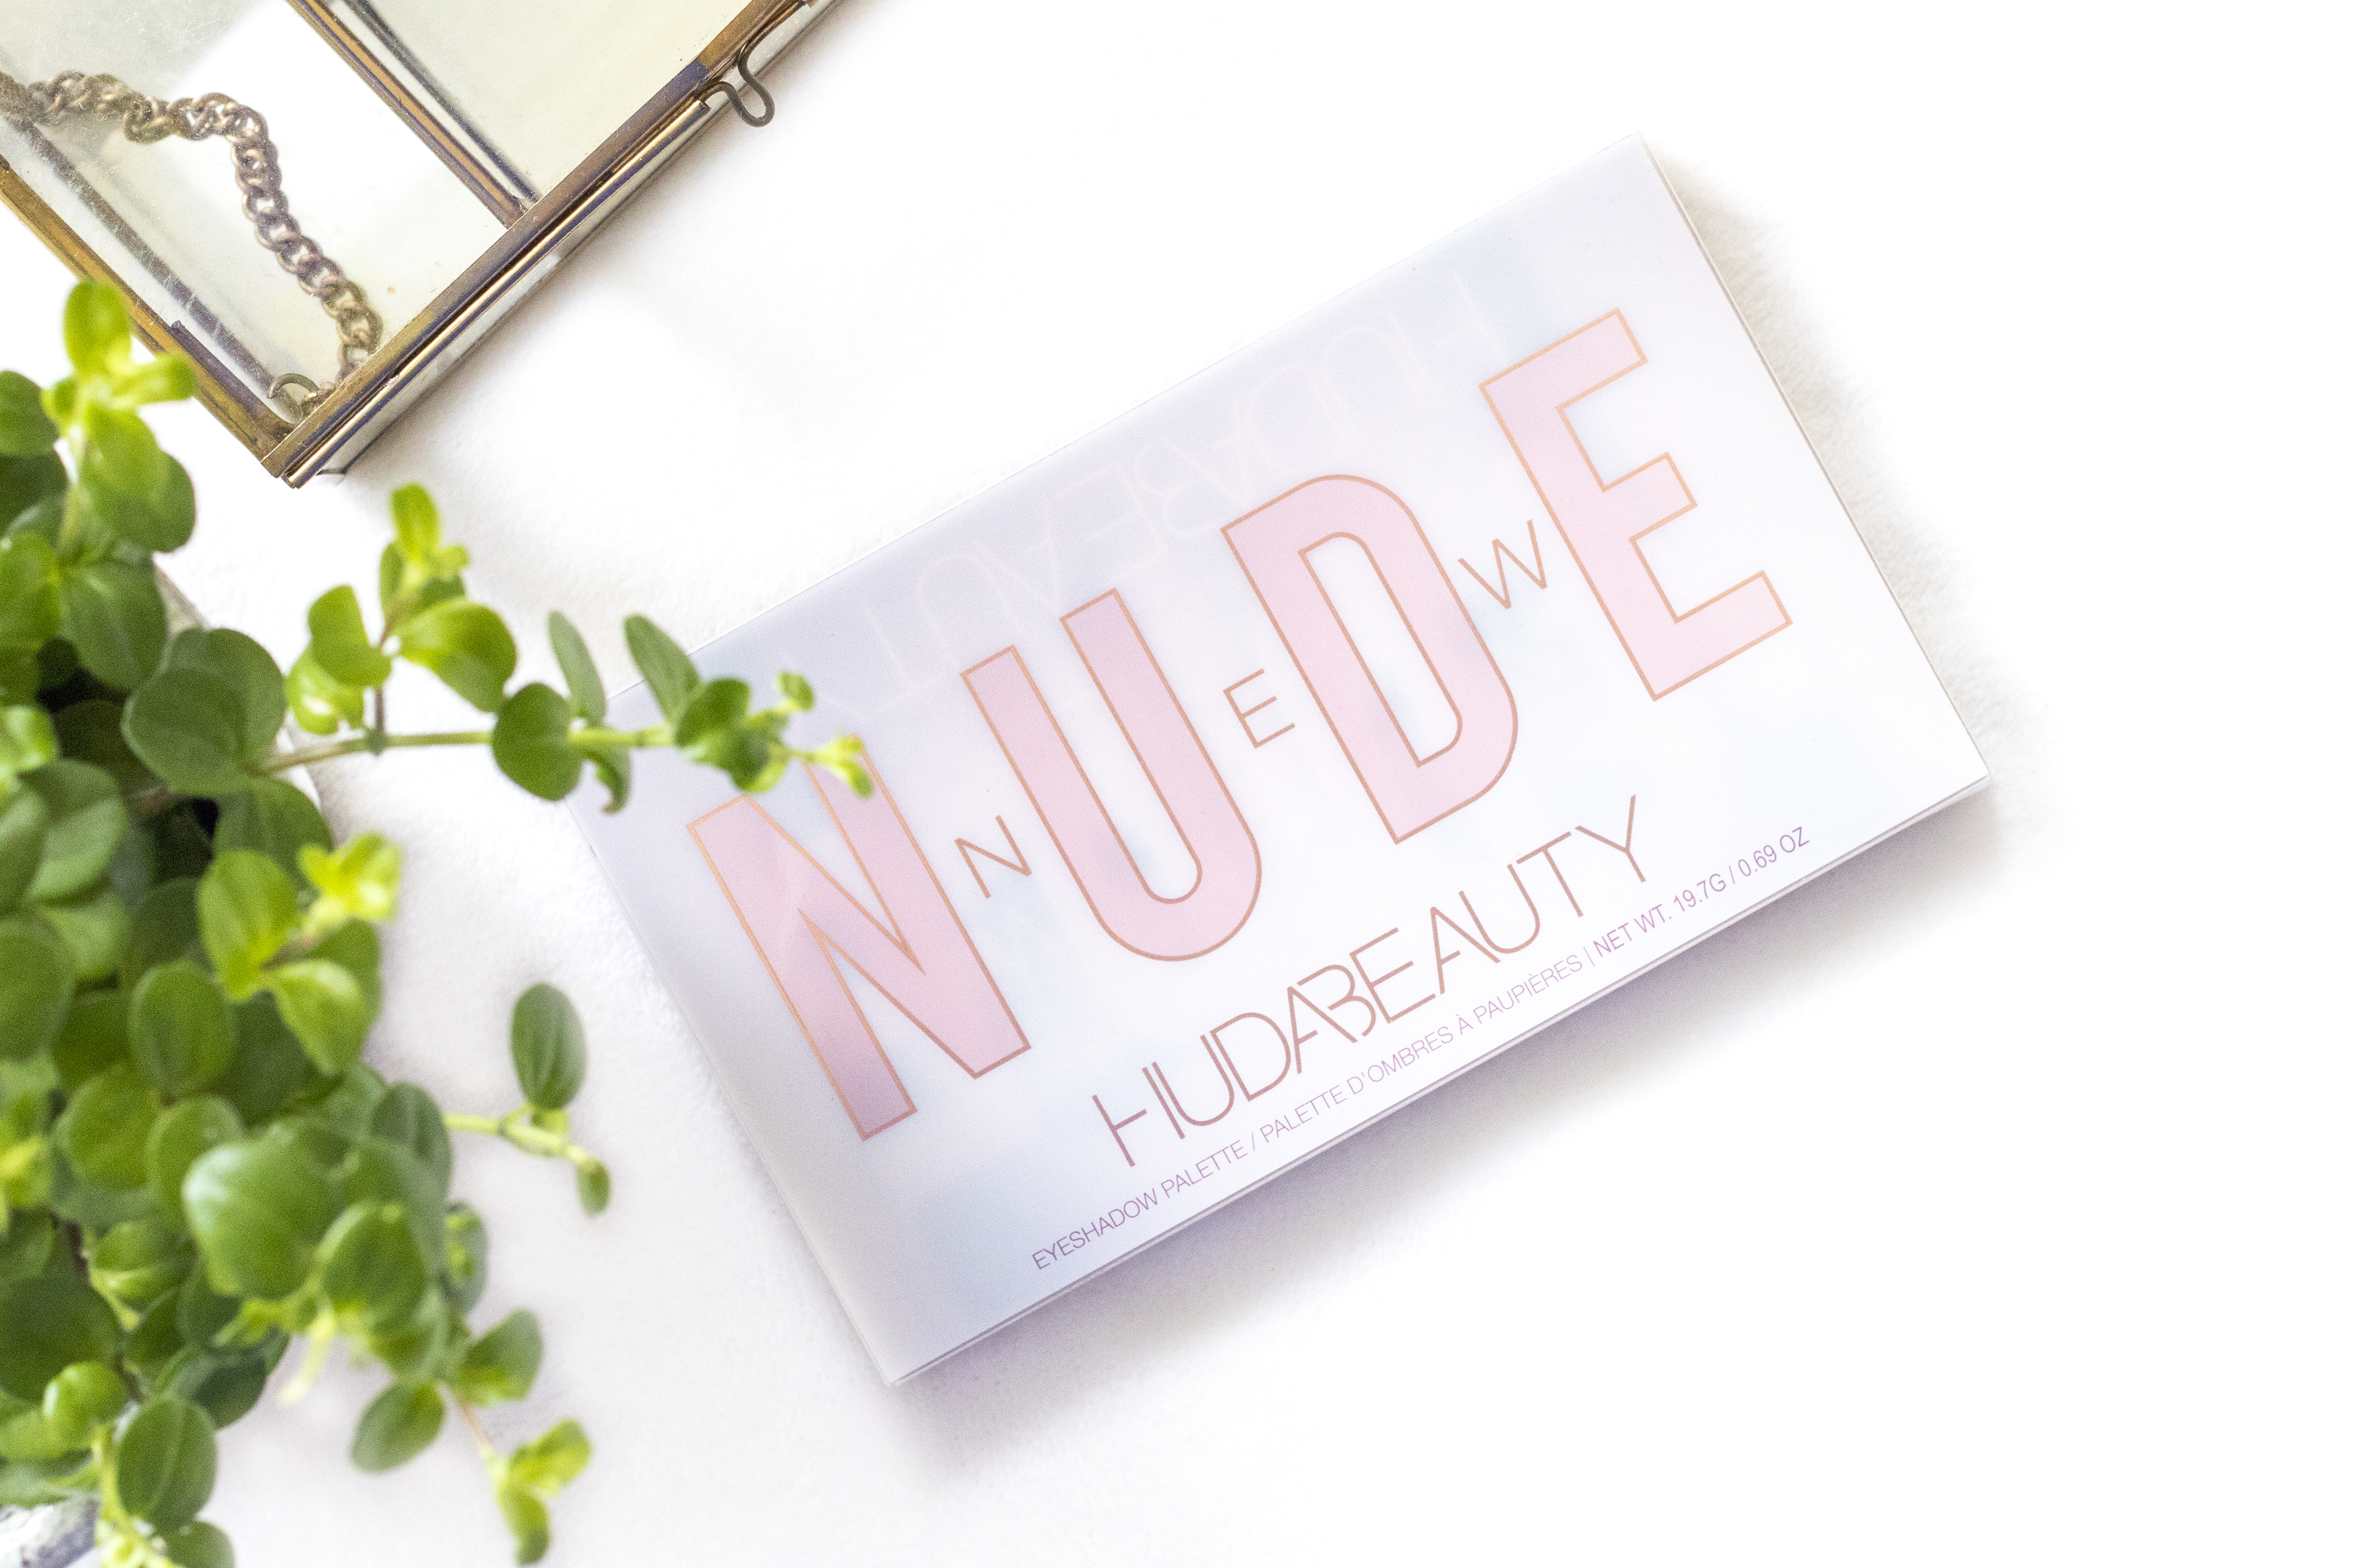 the new nude huda beauty palette